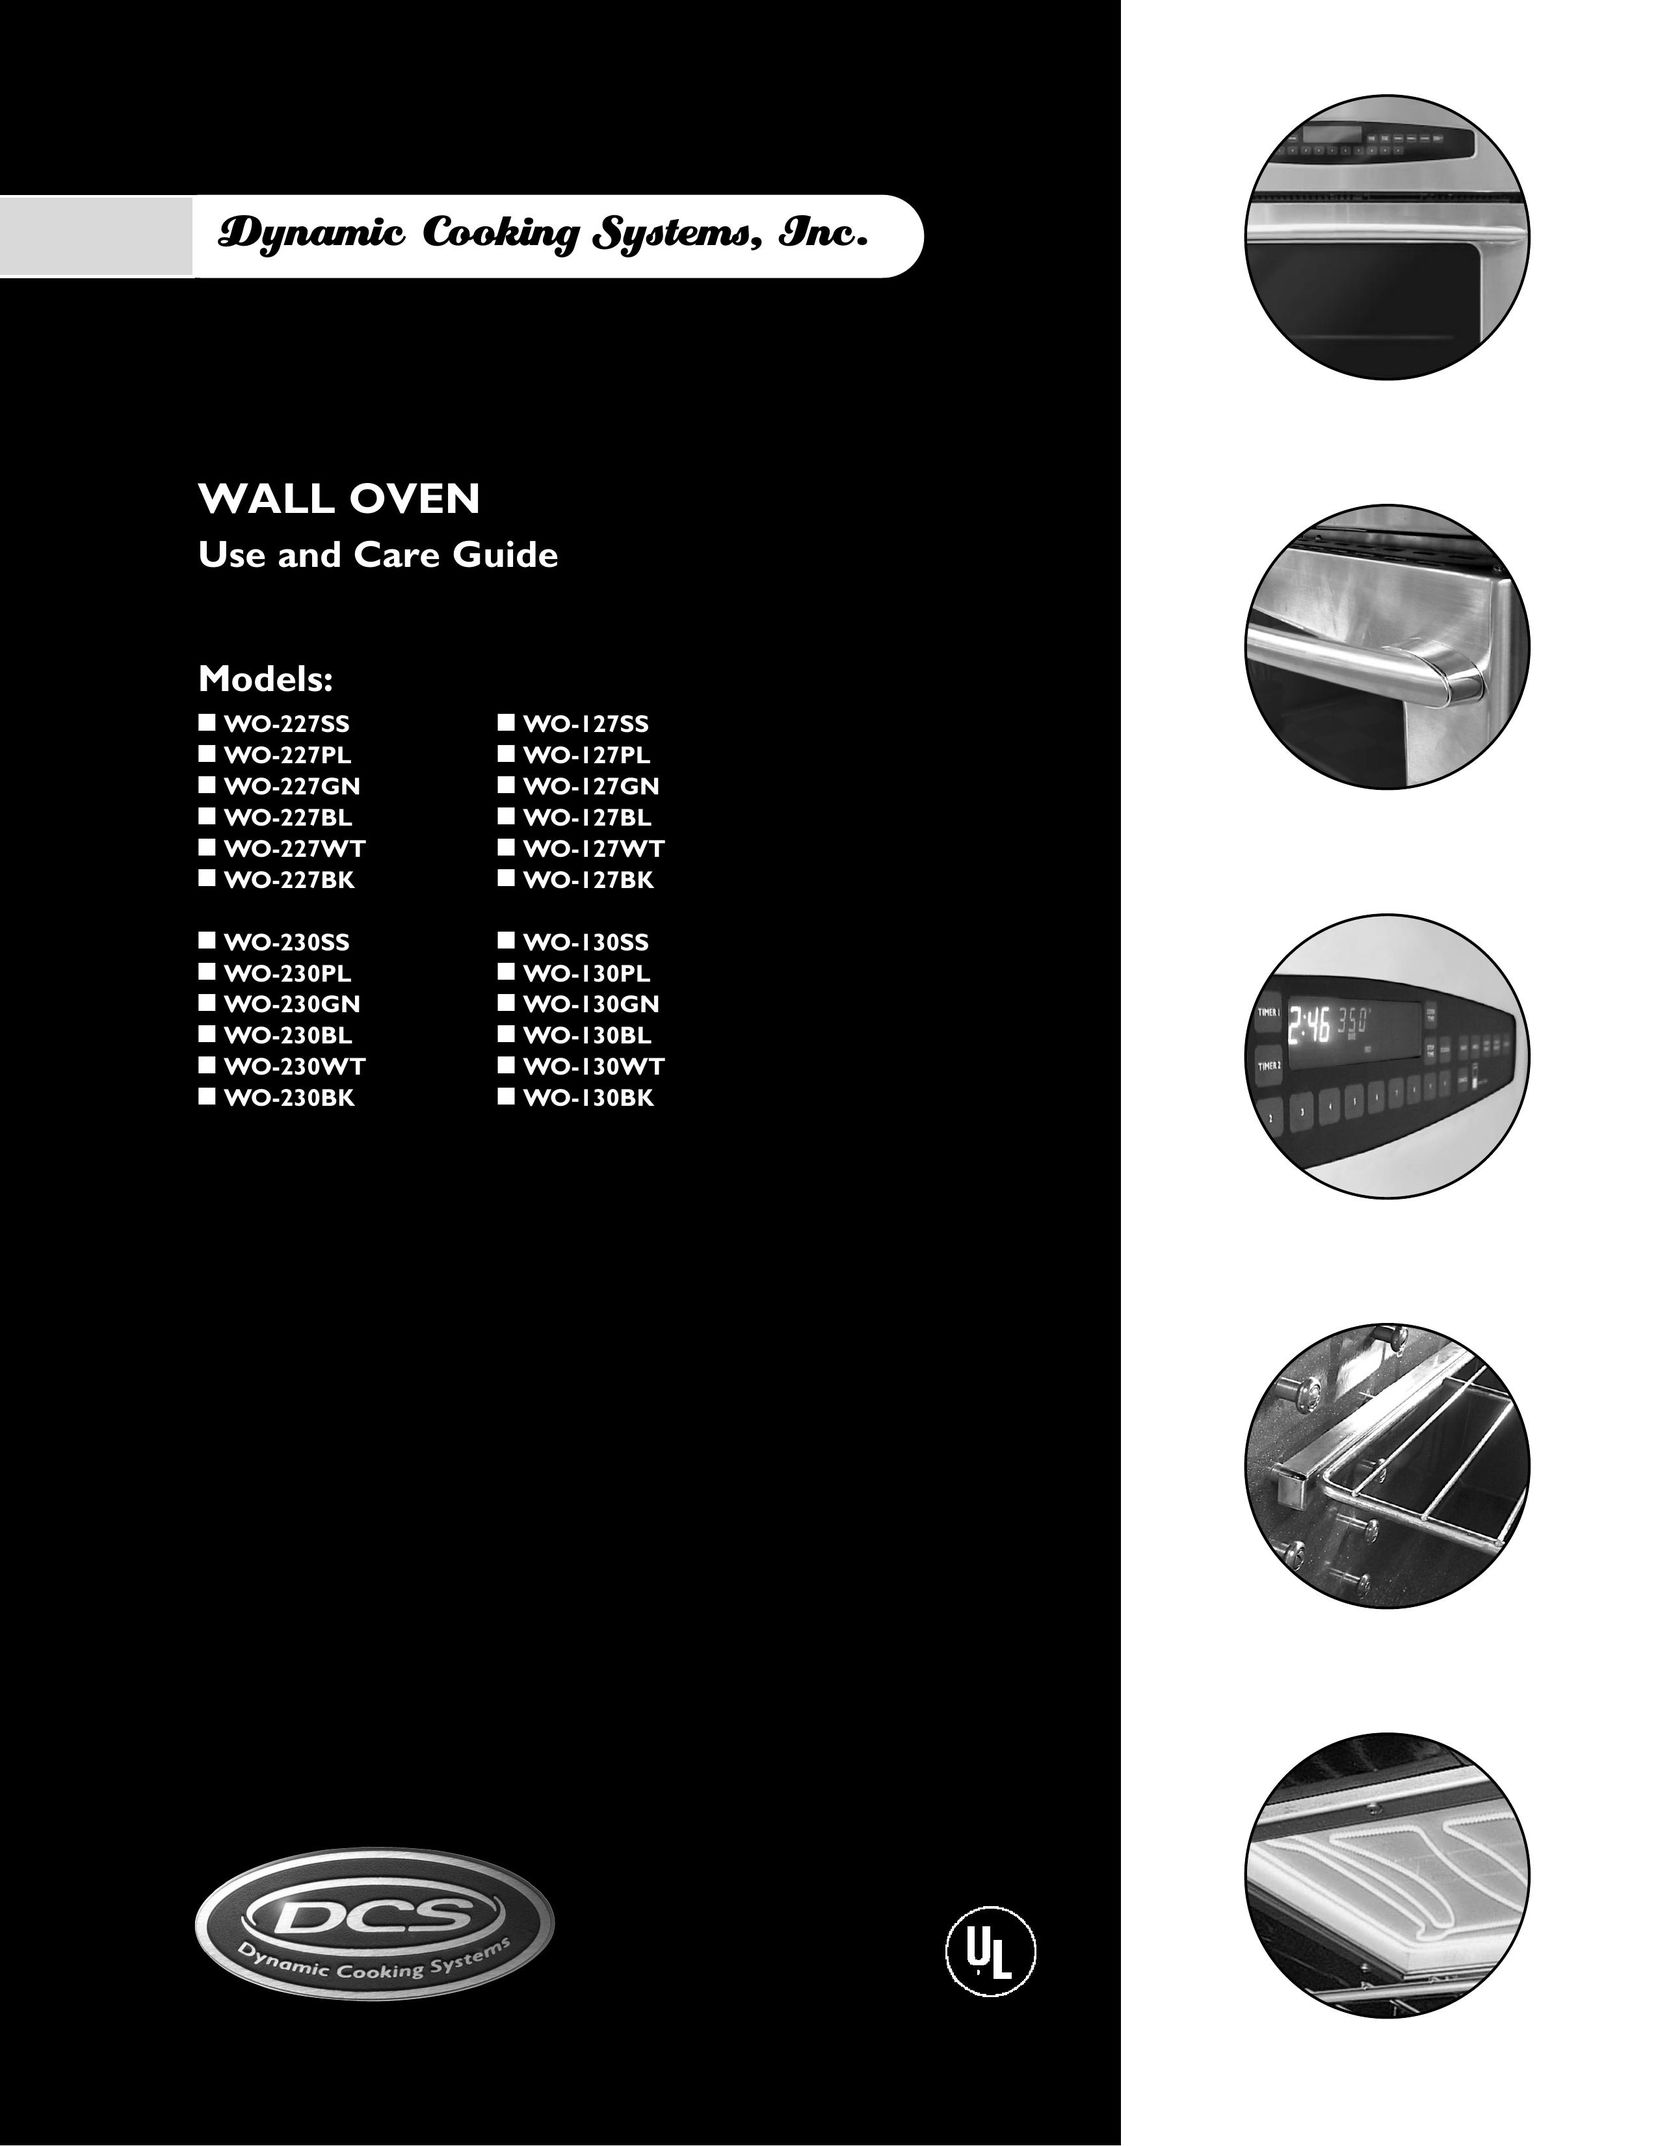 DCS WO-130BK Oven User Manual